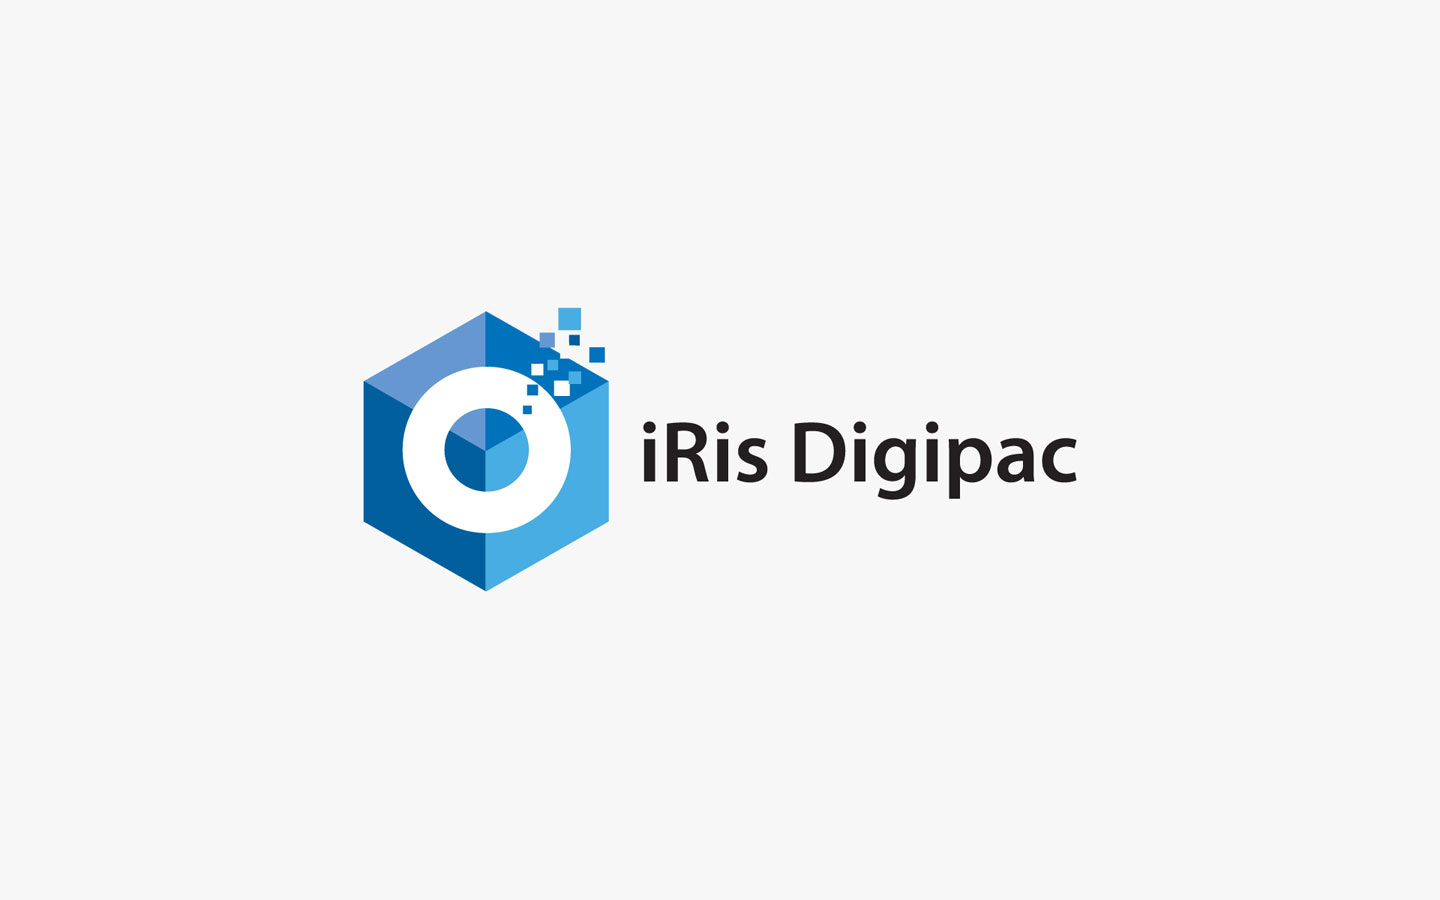 Iris Digipac Logo Design In Brand Colours